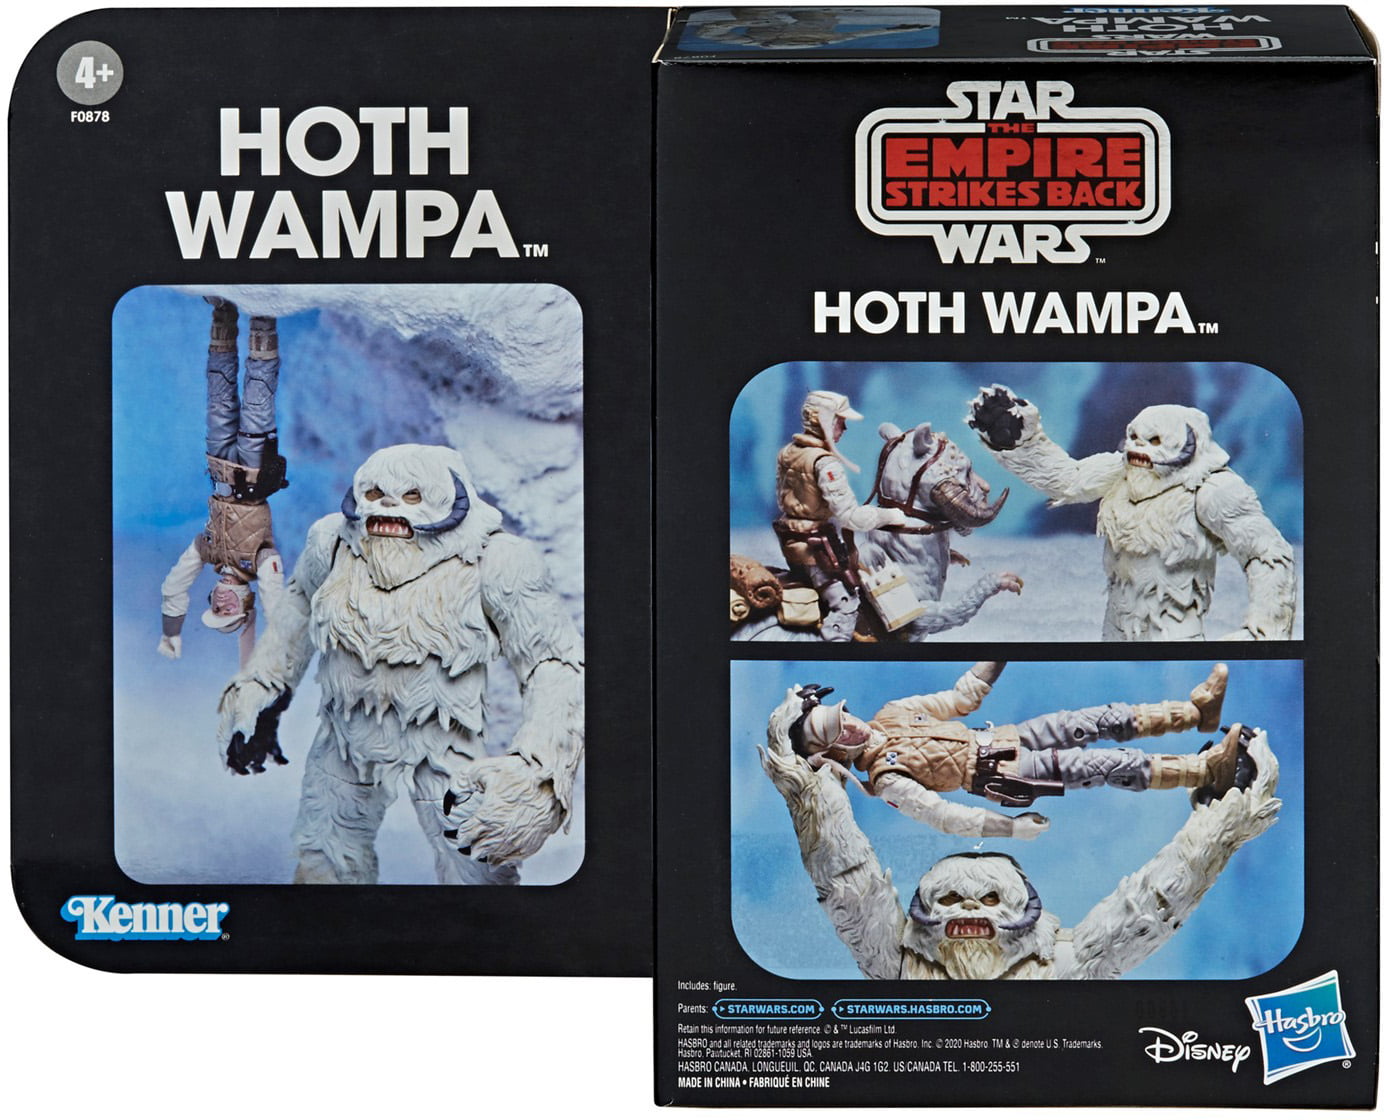 wampa star wars toy